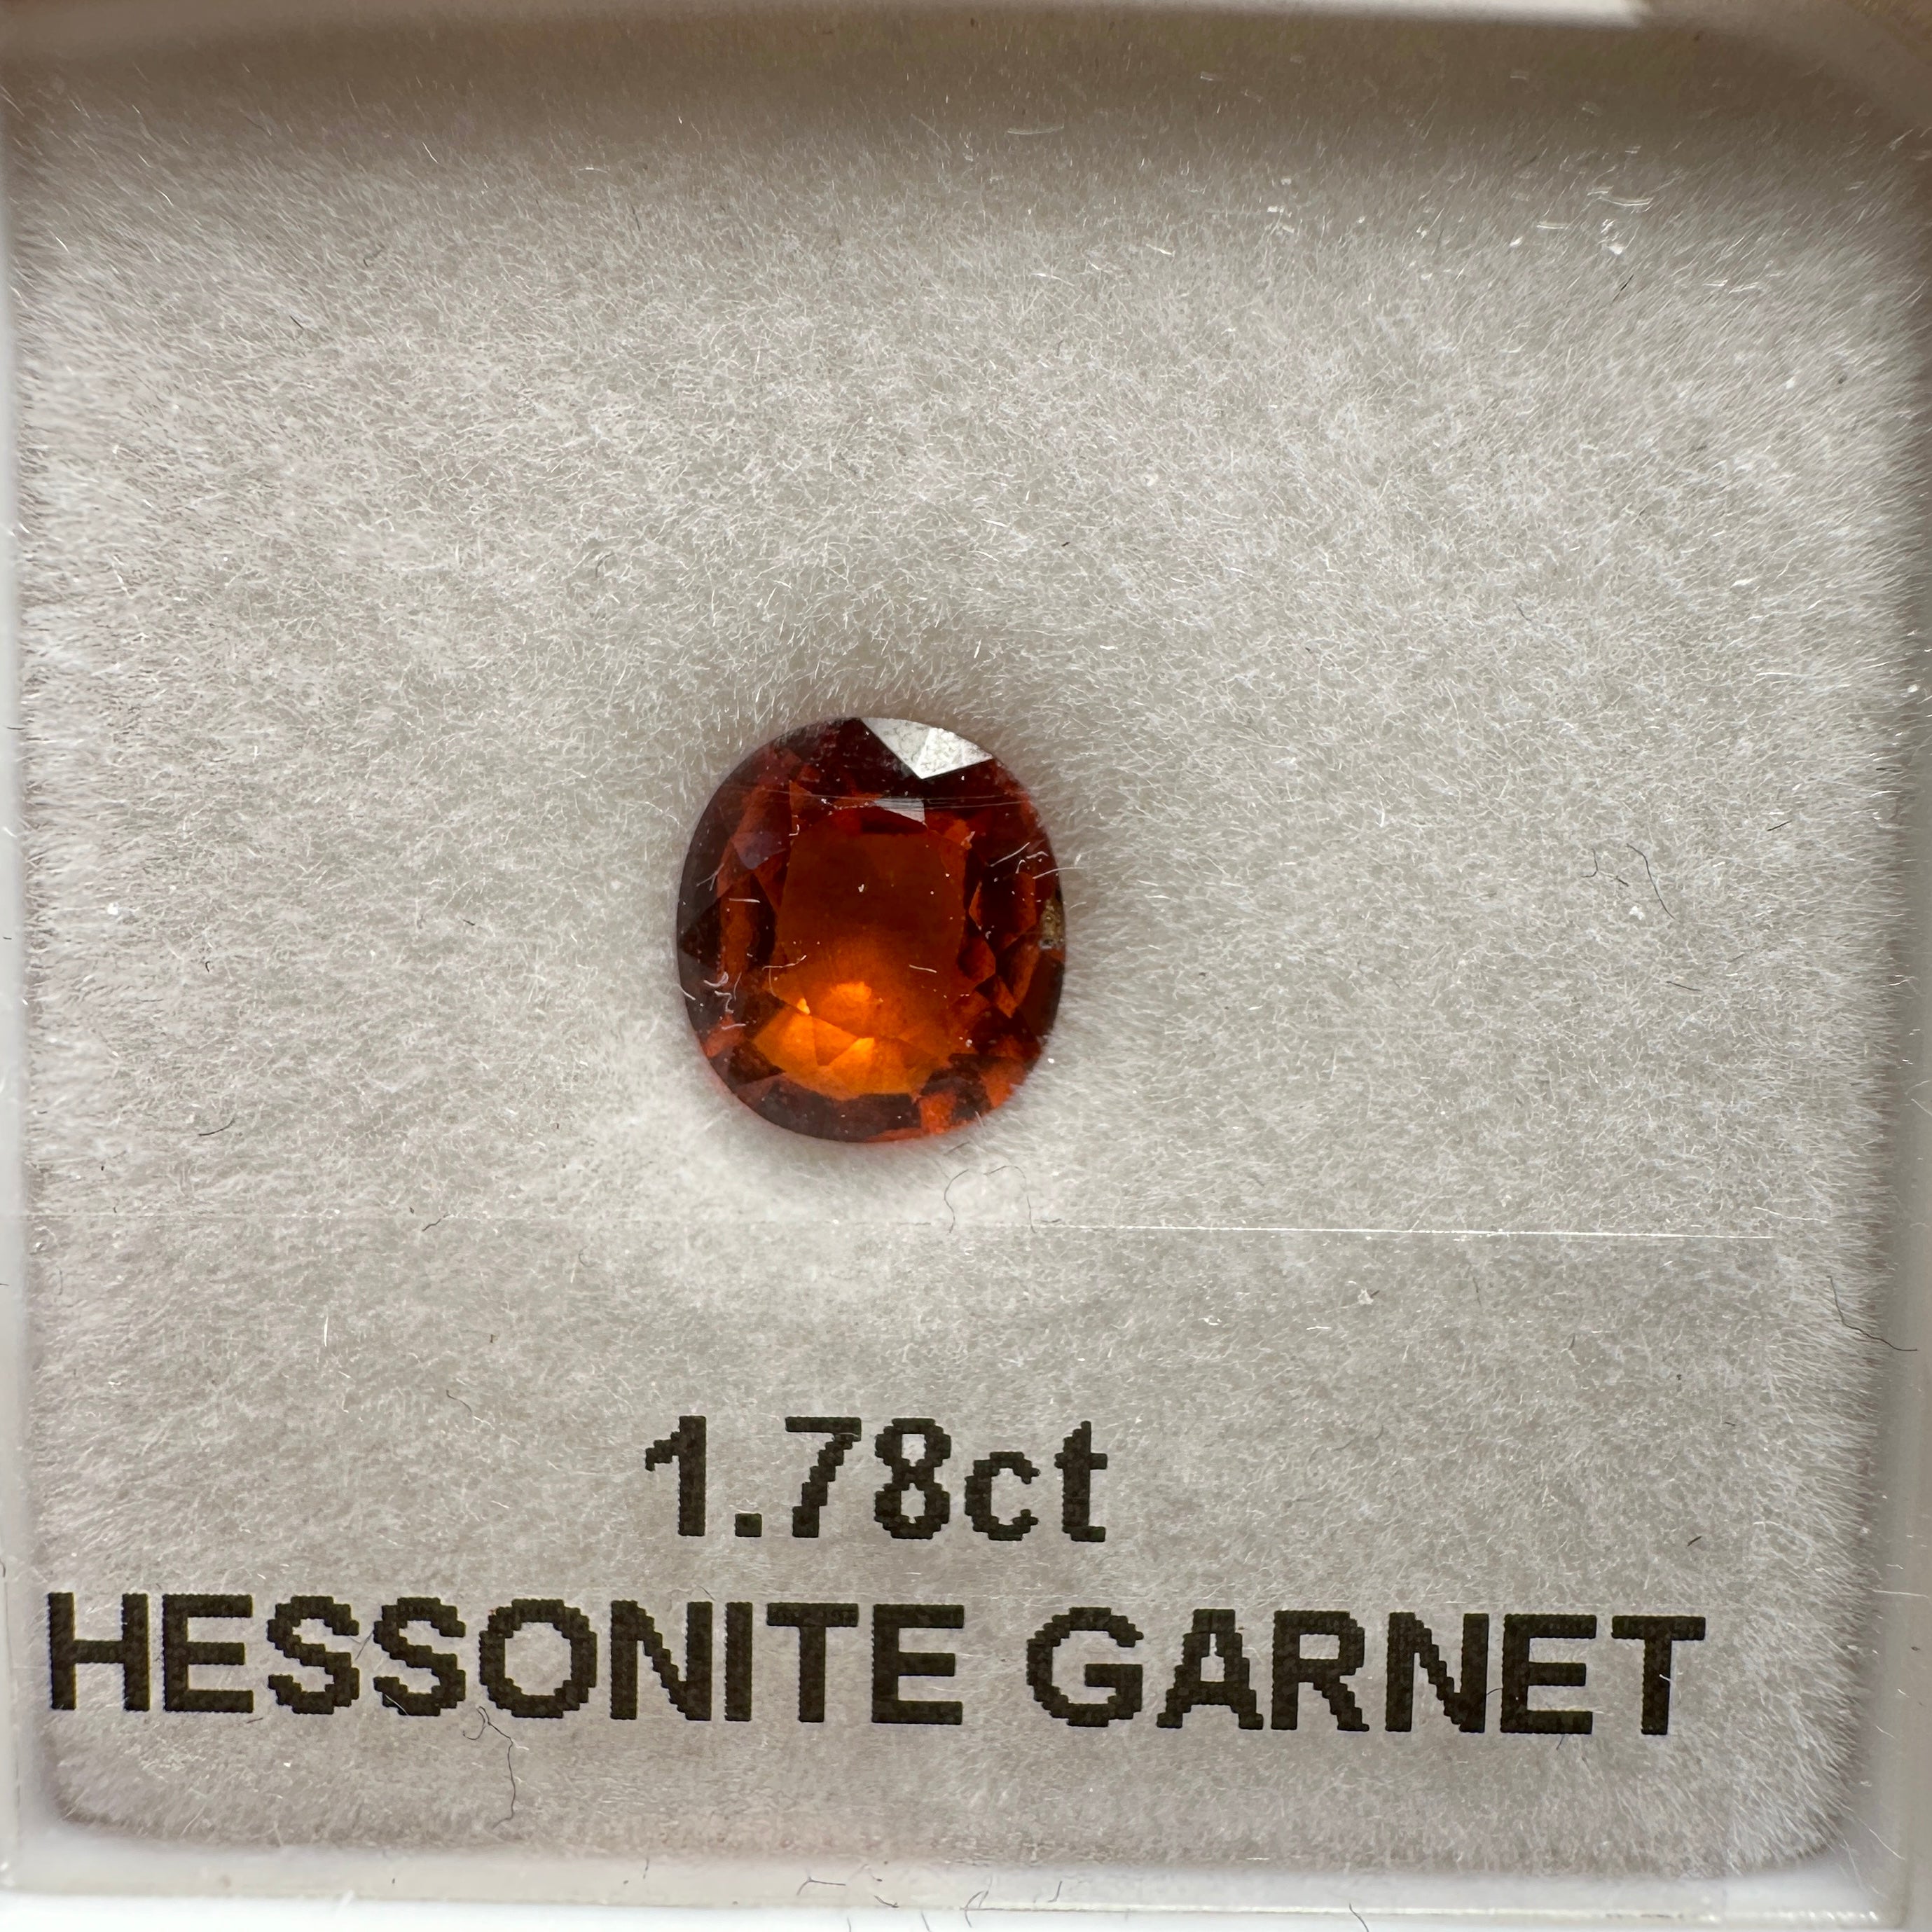 1.78ct Hessonite Garnet, Untreated Unheated, native cut